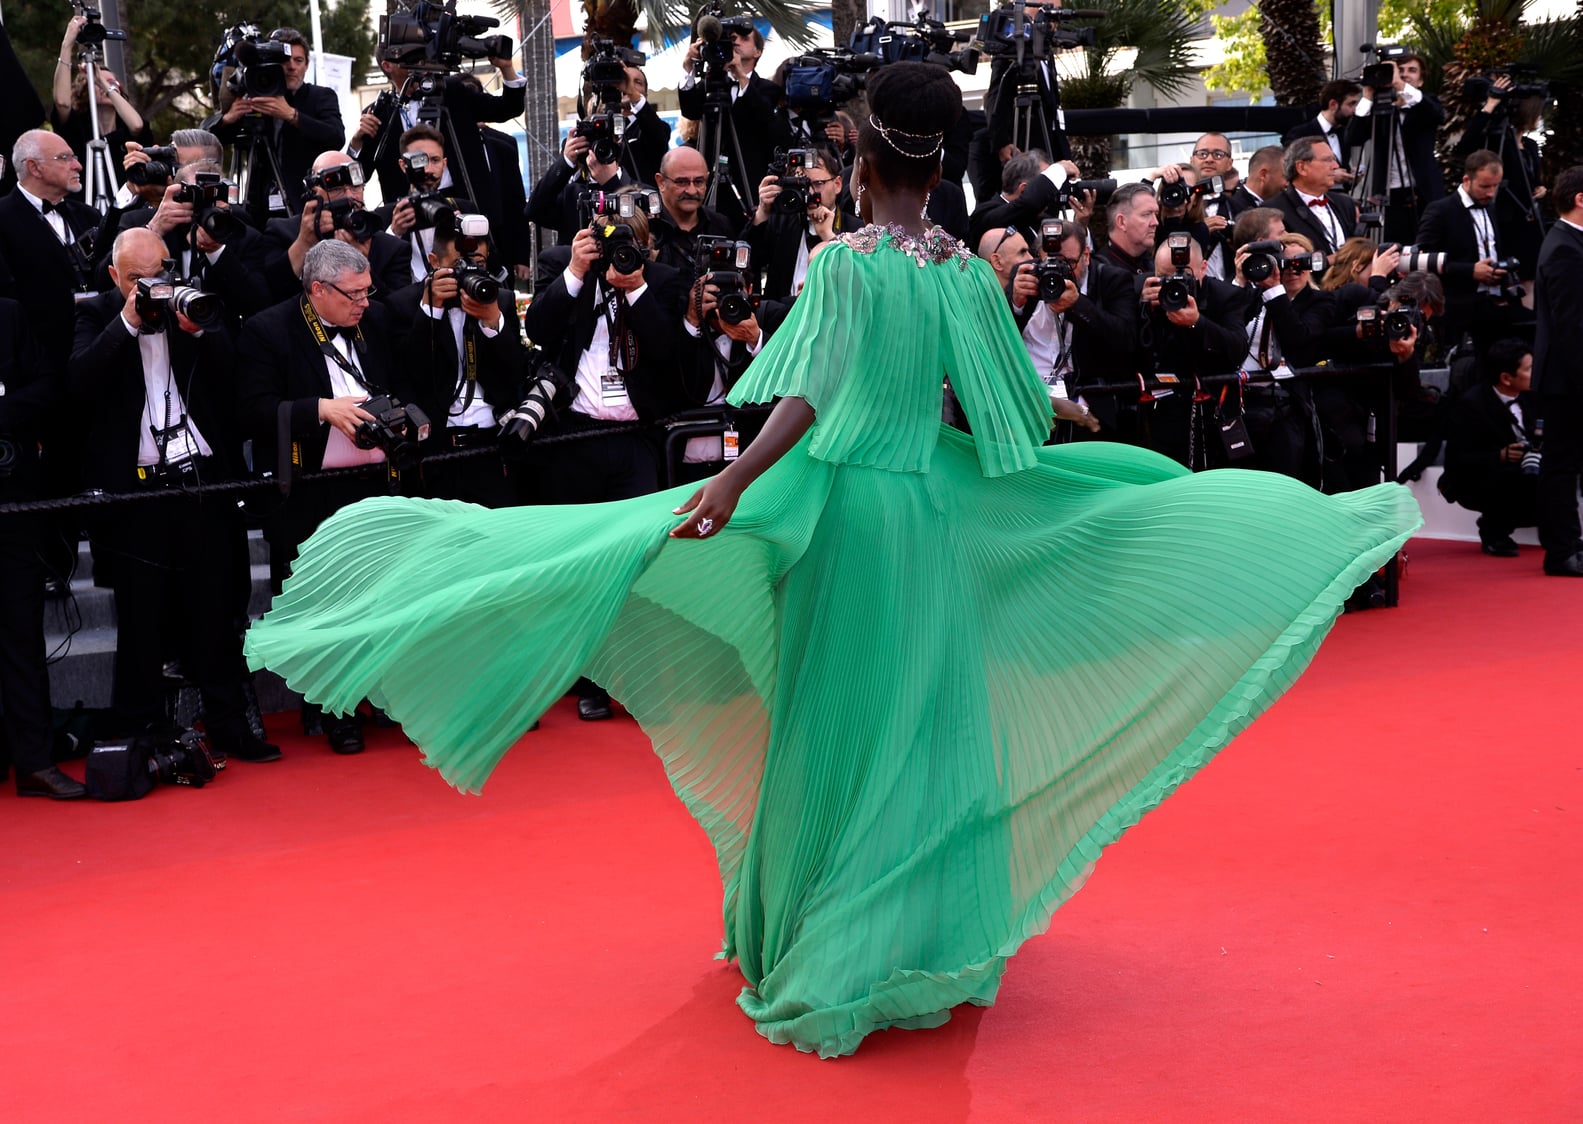 Cannes Film Festival 2015 Pictures From Behind | POPSUGAR Celebrity